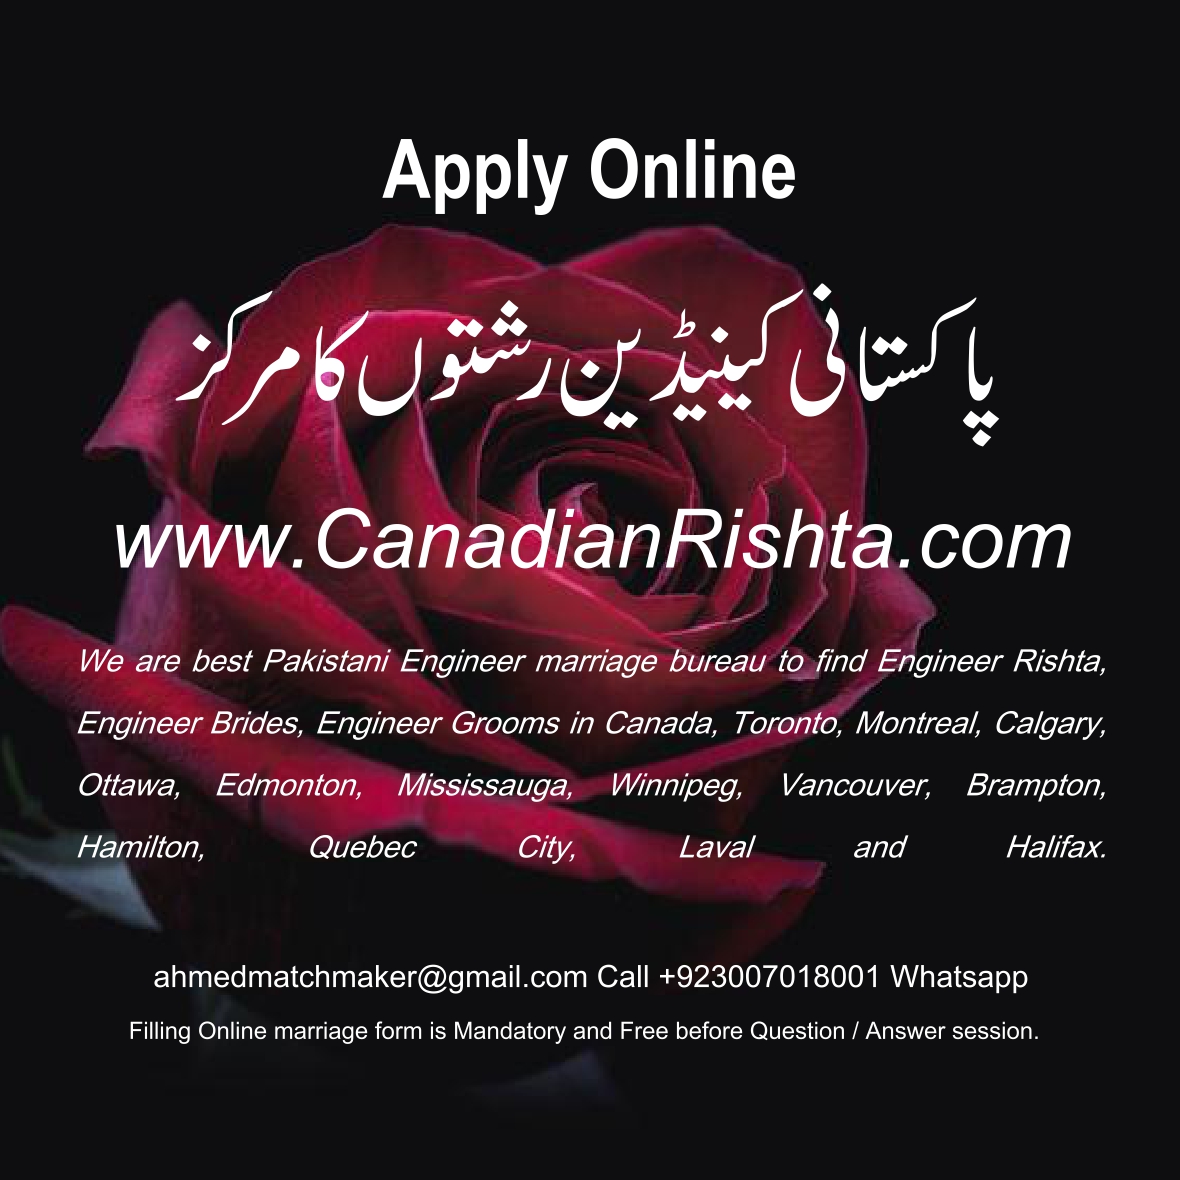 Pakistani-rishta-shaadi-marriage-bureau-Canada-Toronto-Montreal-Calgary-Ottawa-Vancouver-Brampton-Hamilton-Quebec-2.jpg